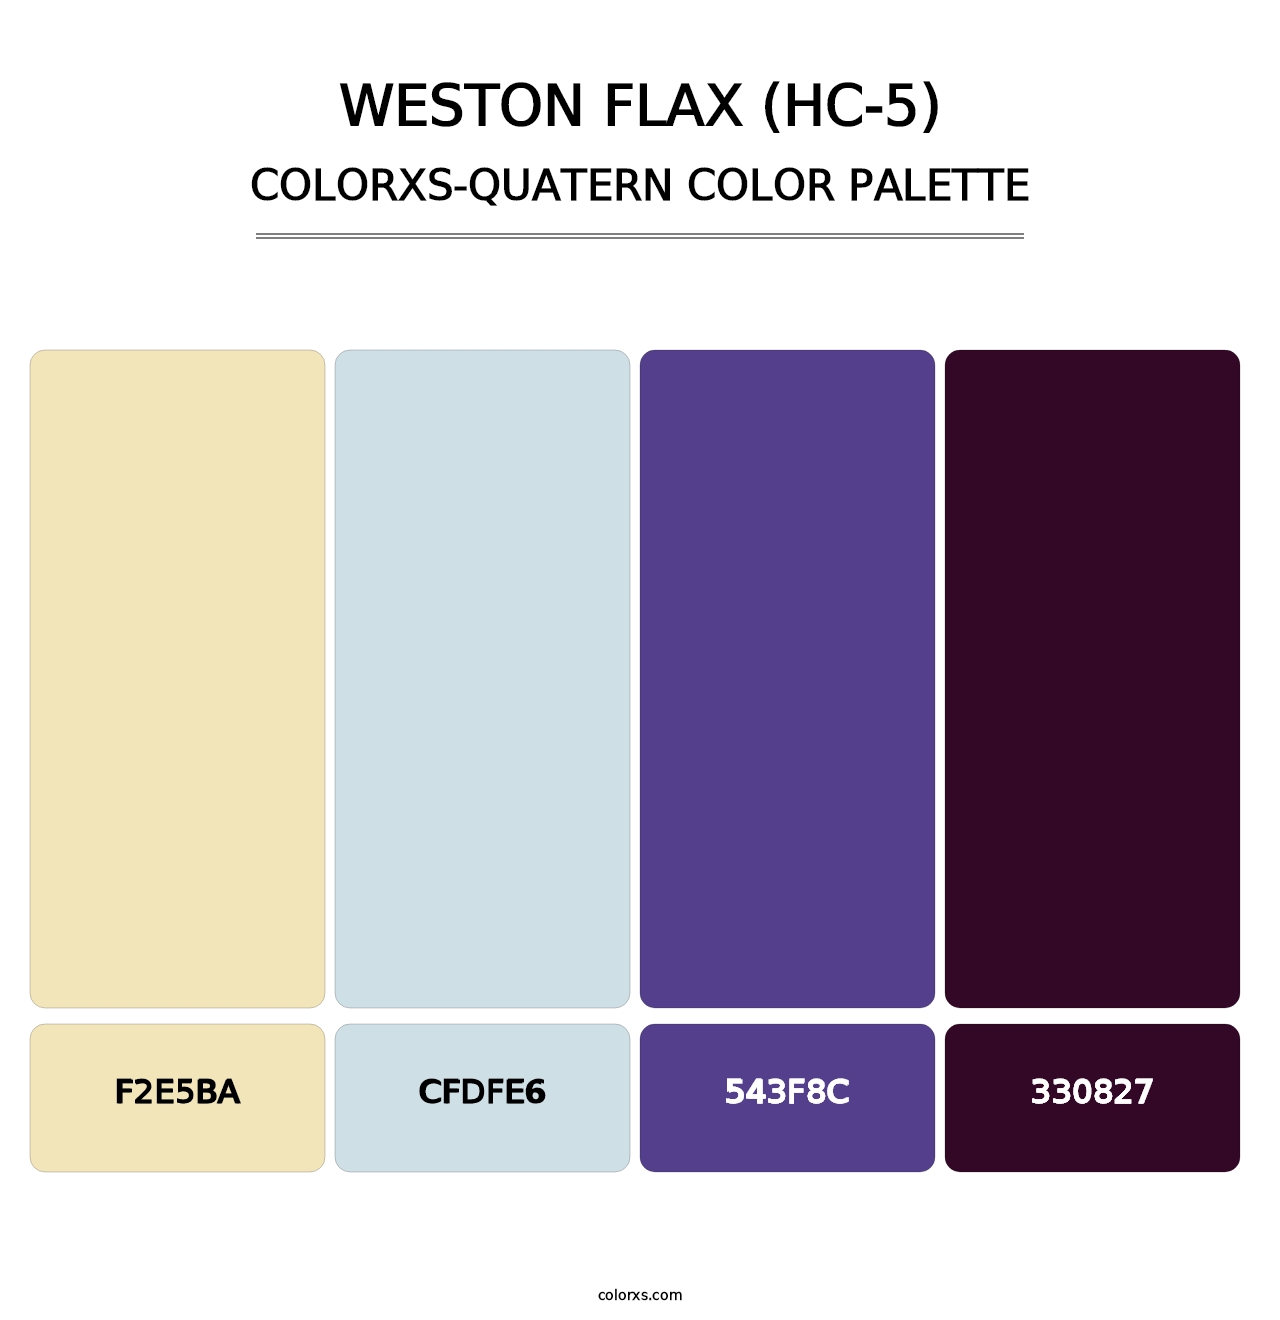 Weston Flax (HC-5) - Colorxs Quatern Palette